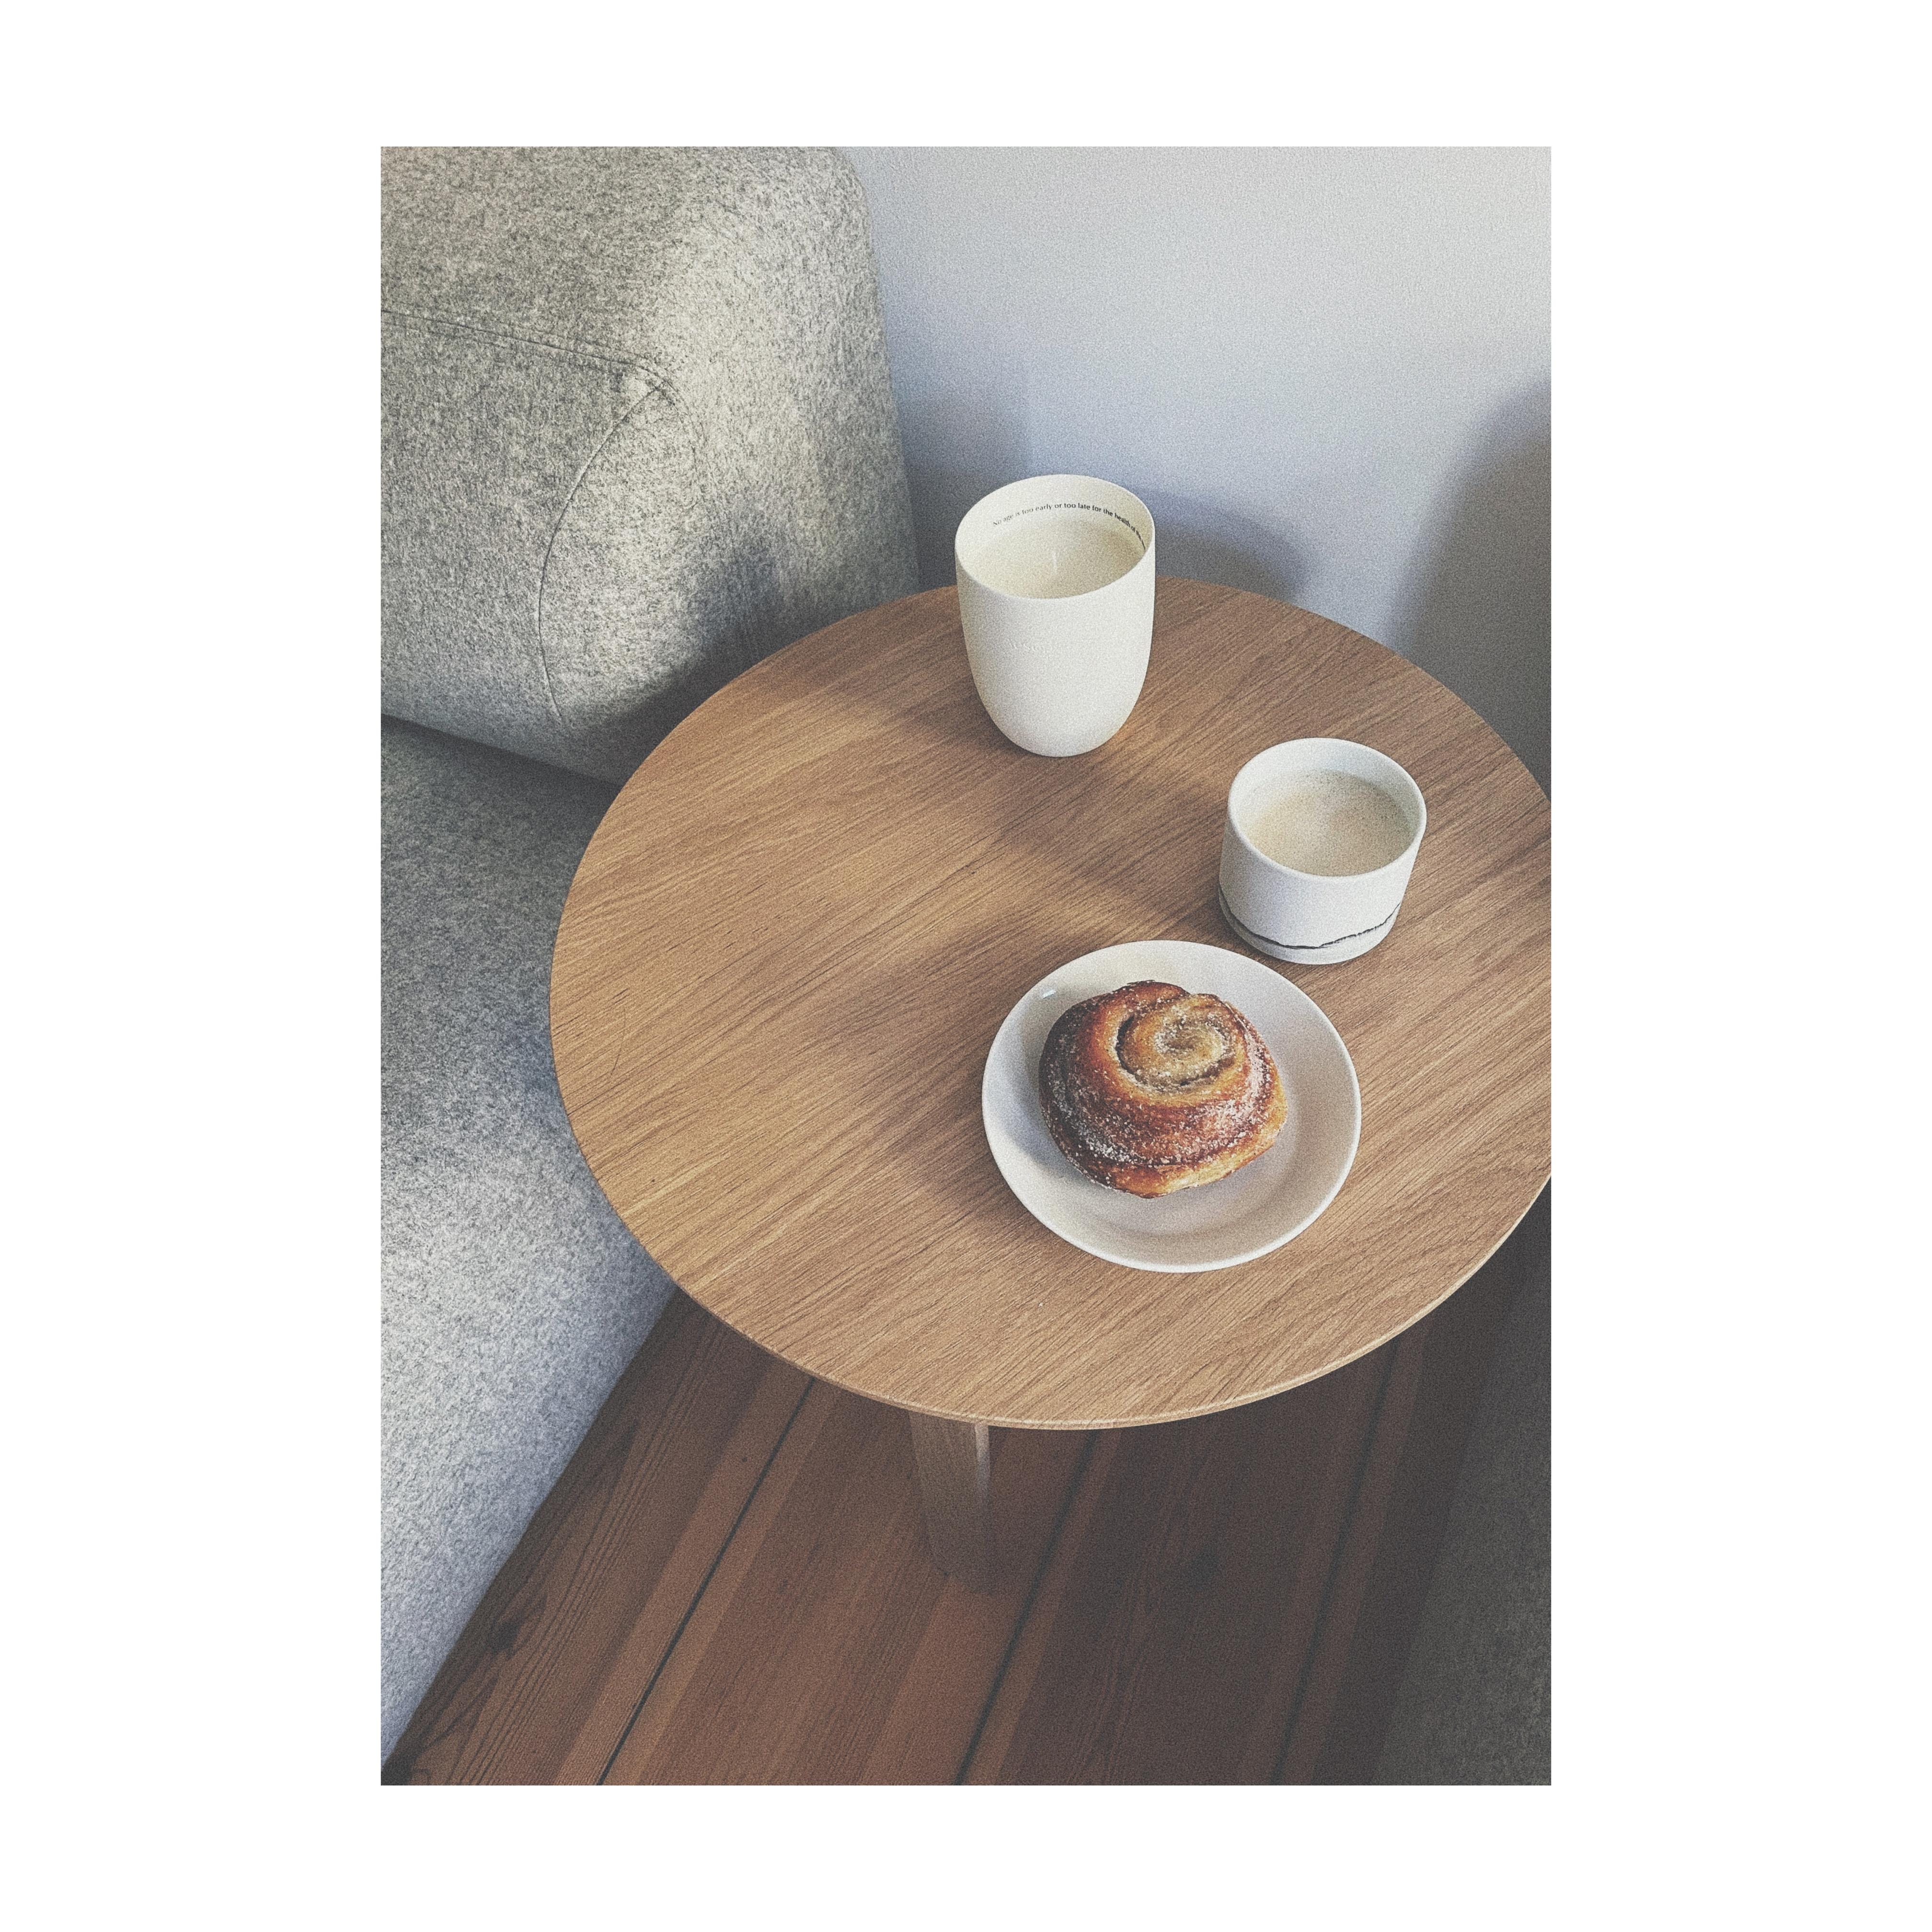 easy like monday morning

#breakfast #coffee #bolia #hay #interior #tinyliving #kleinewohnung #42qm #berlin #altbau